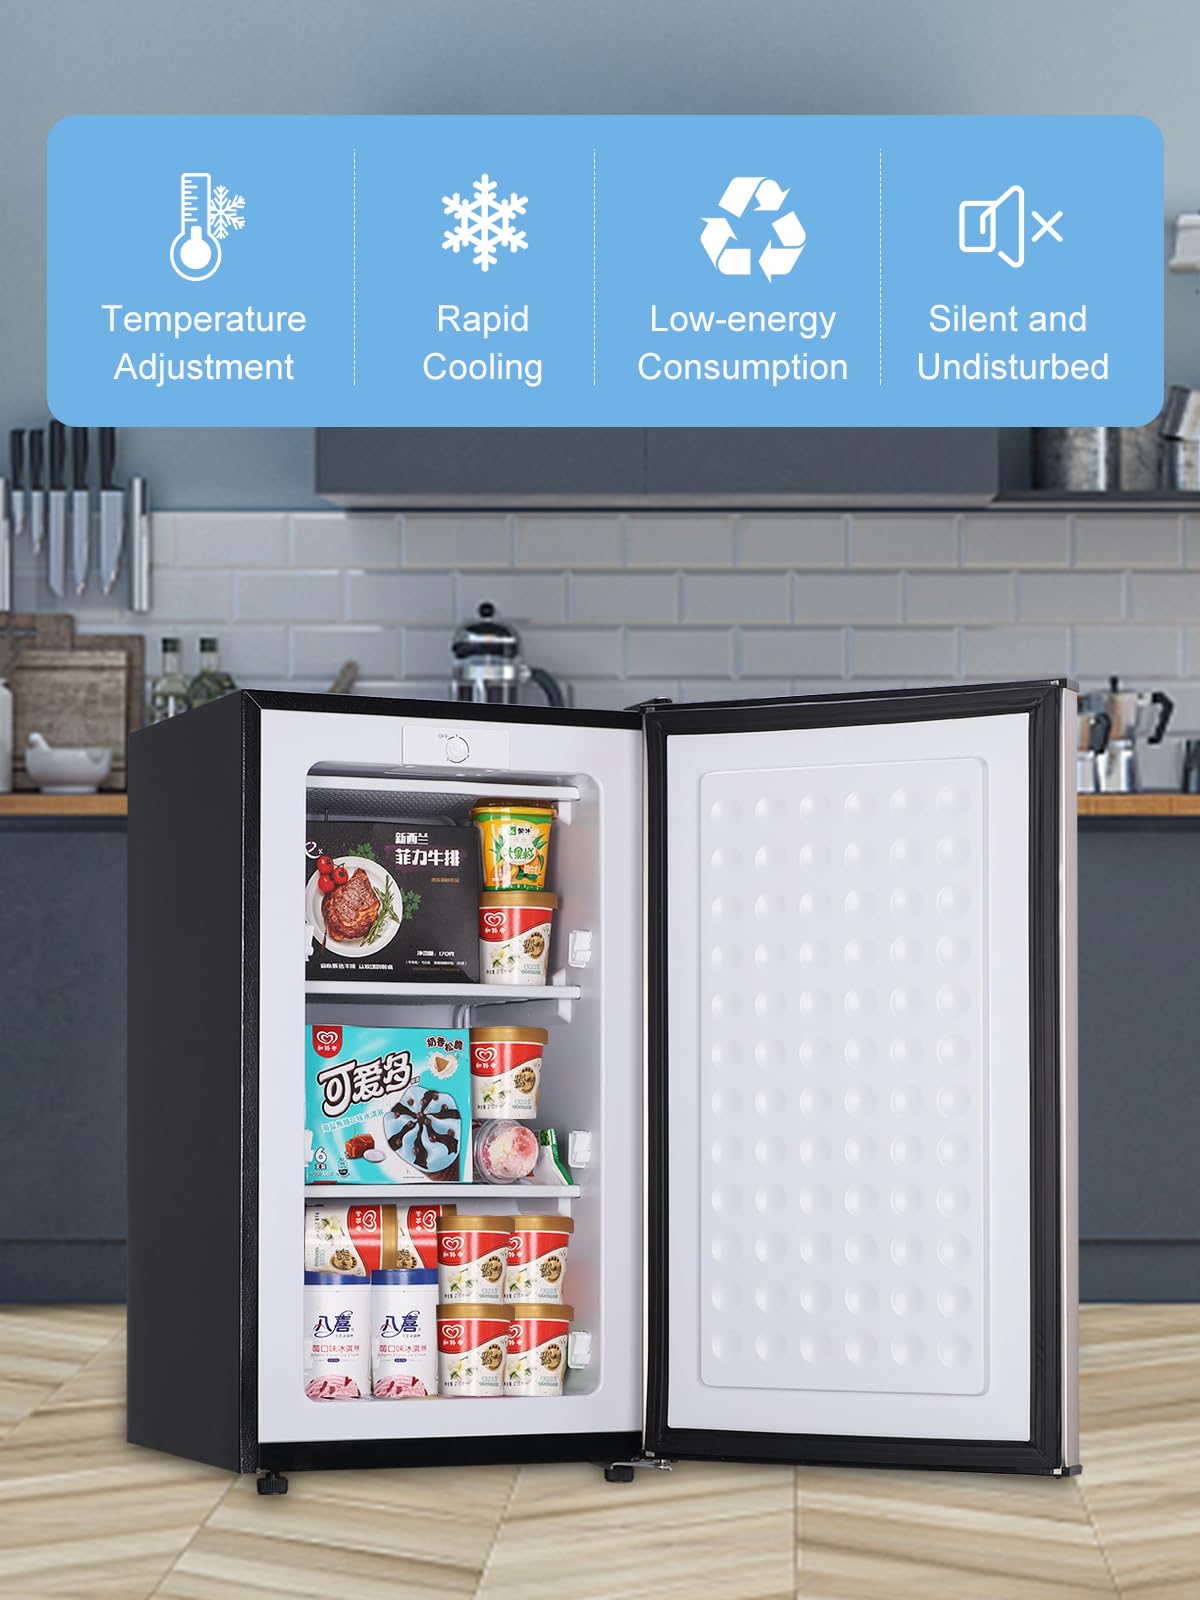 KRIB BLING 3.0 Cu.ft Upright Freezer Compact Mini Freezer with Removab –  GeekChefKitchen